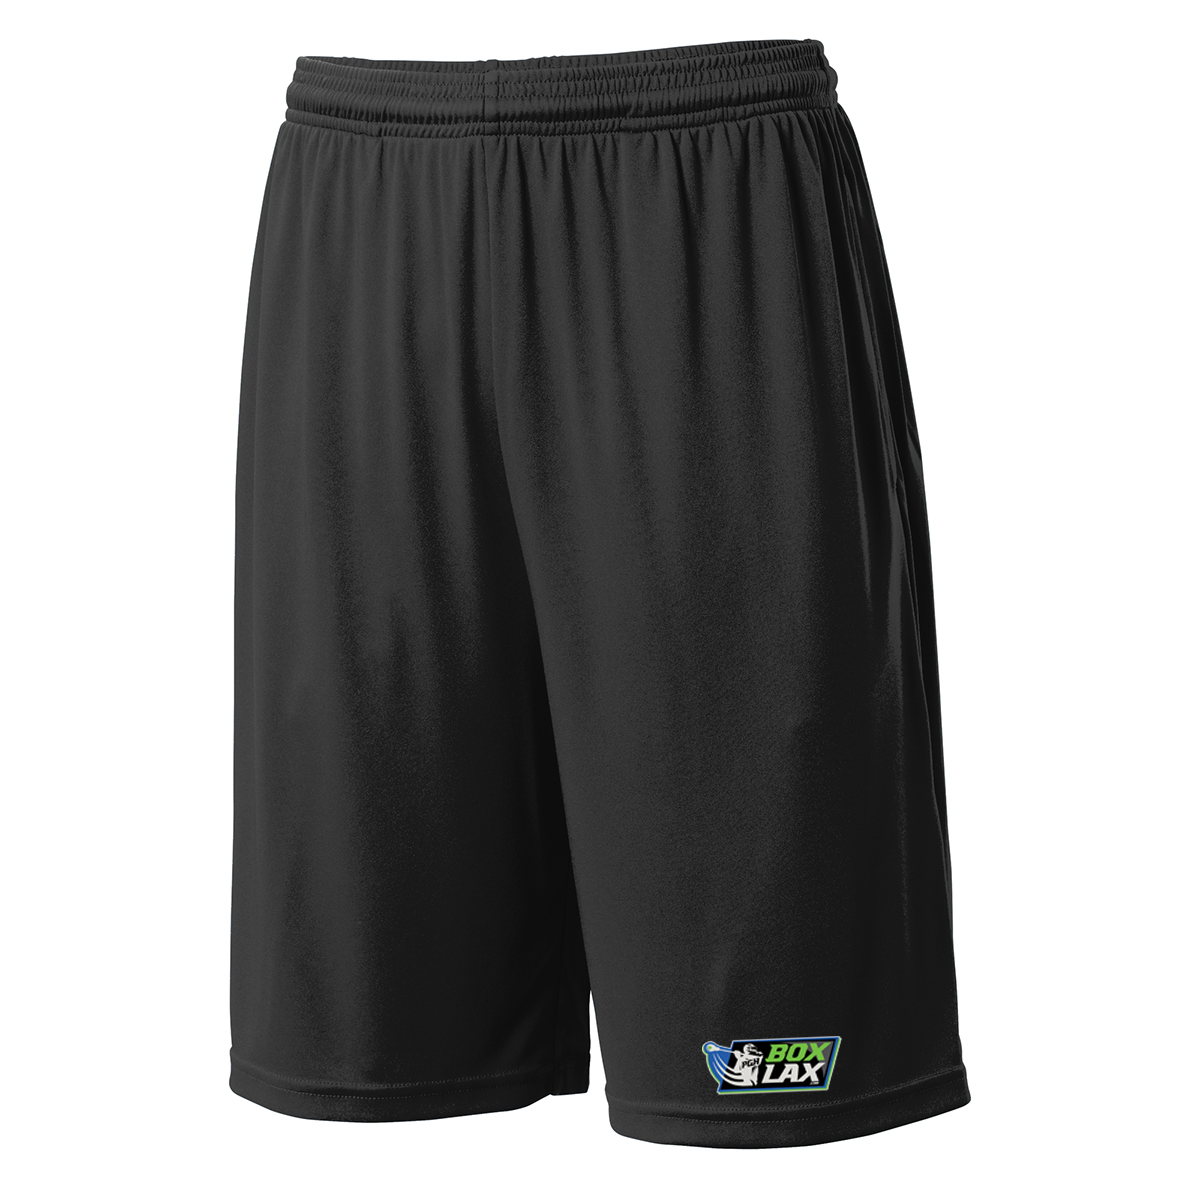 PSL Box Shorts